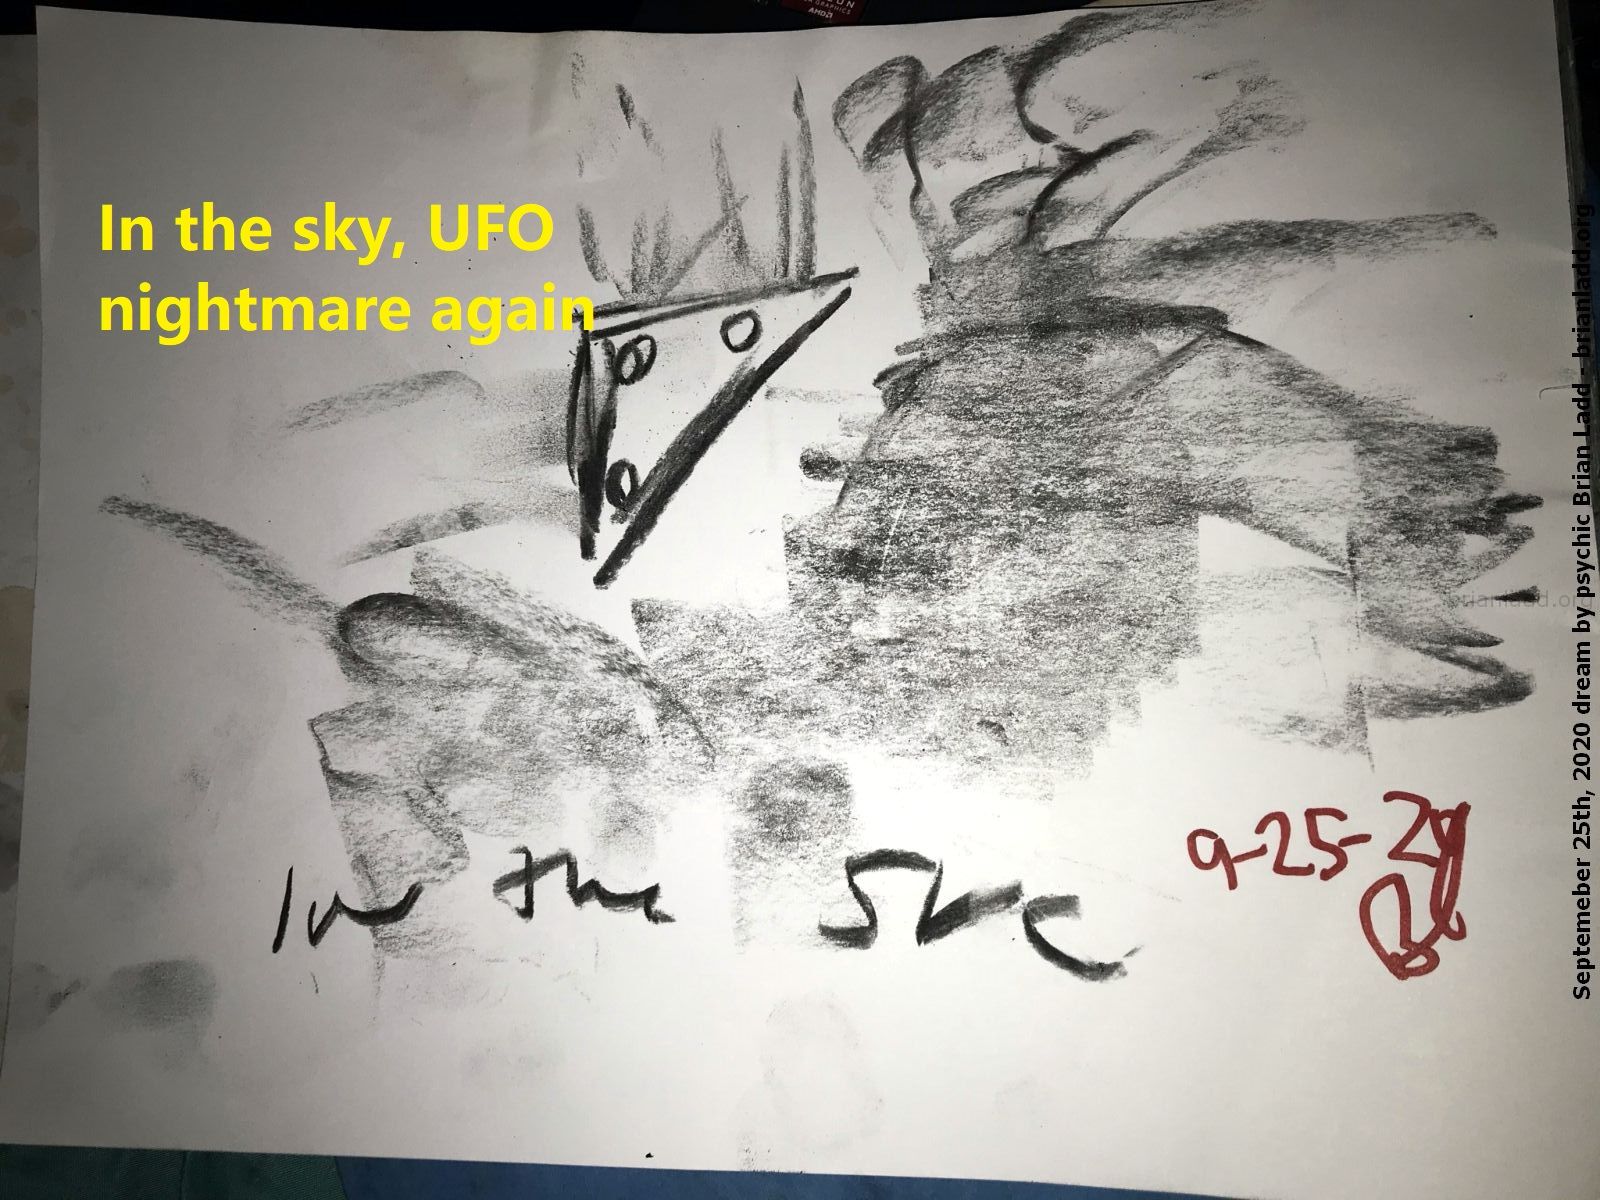 13698 25 September 2020 1 - In The Sky, Ufo Nightmare Again....
In The Sky, Ufo Nightmare Again.
